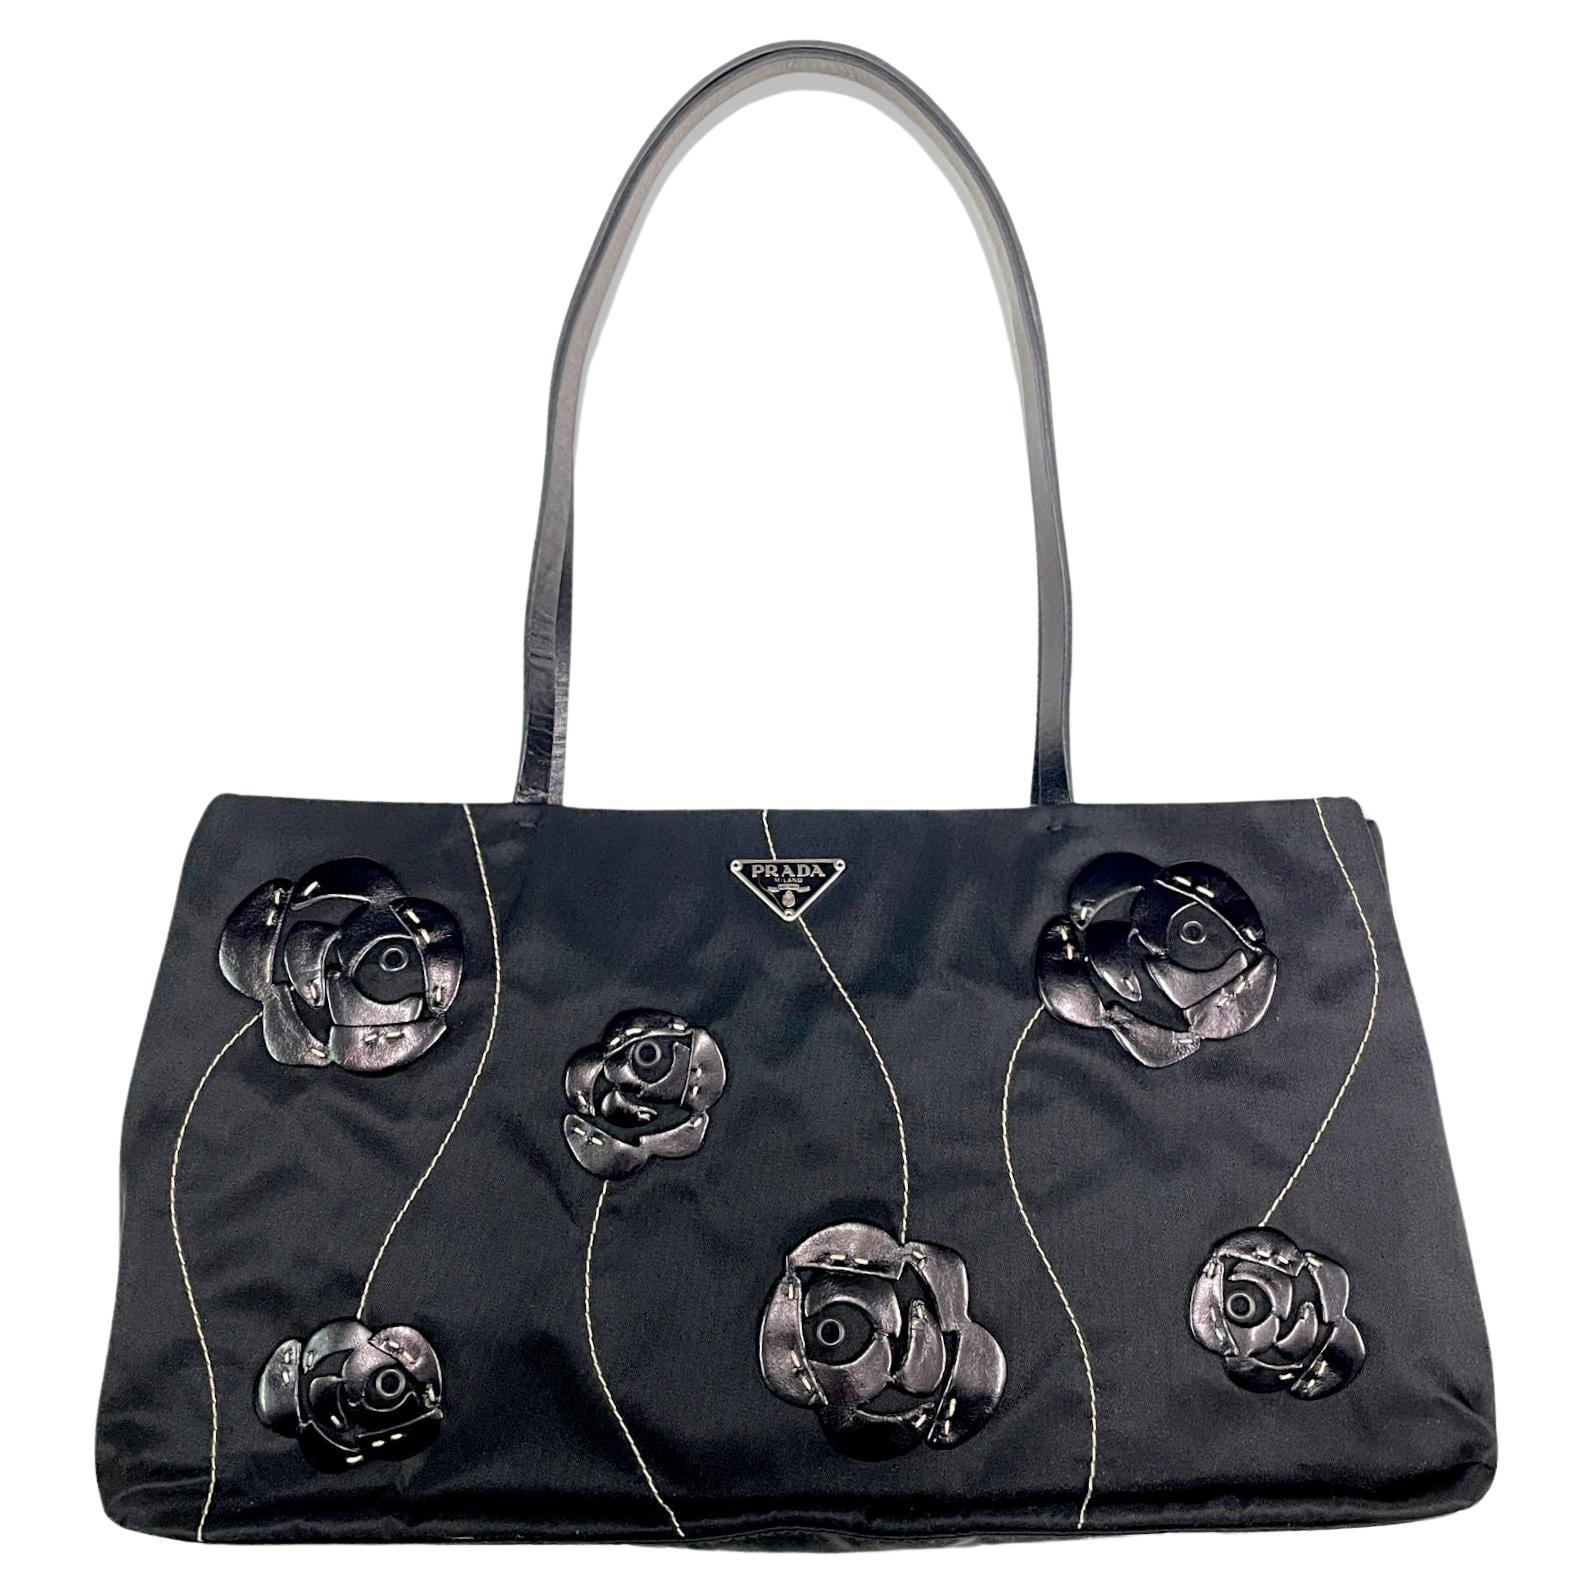 Prada "Flowers" Shoulder Bag 1990s